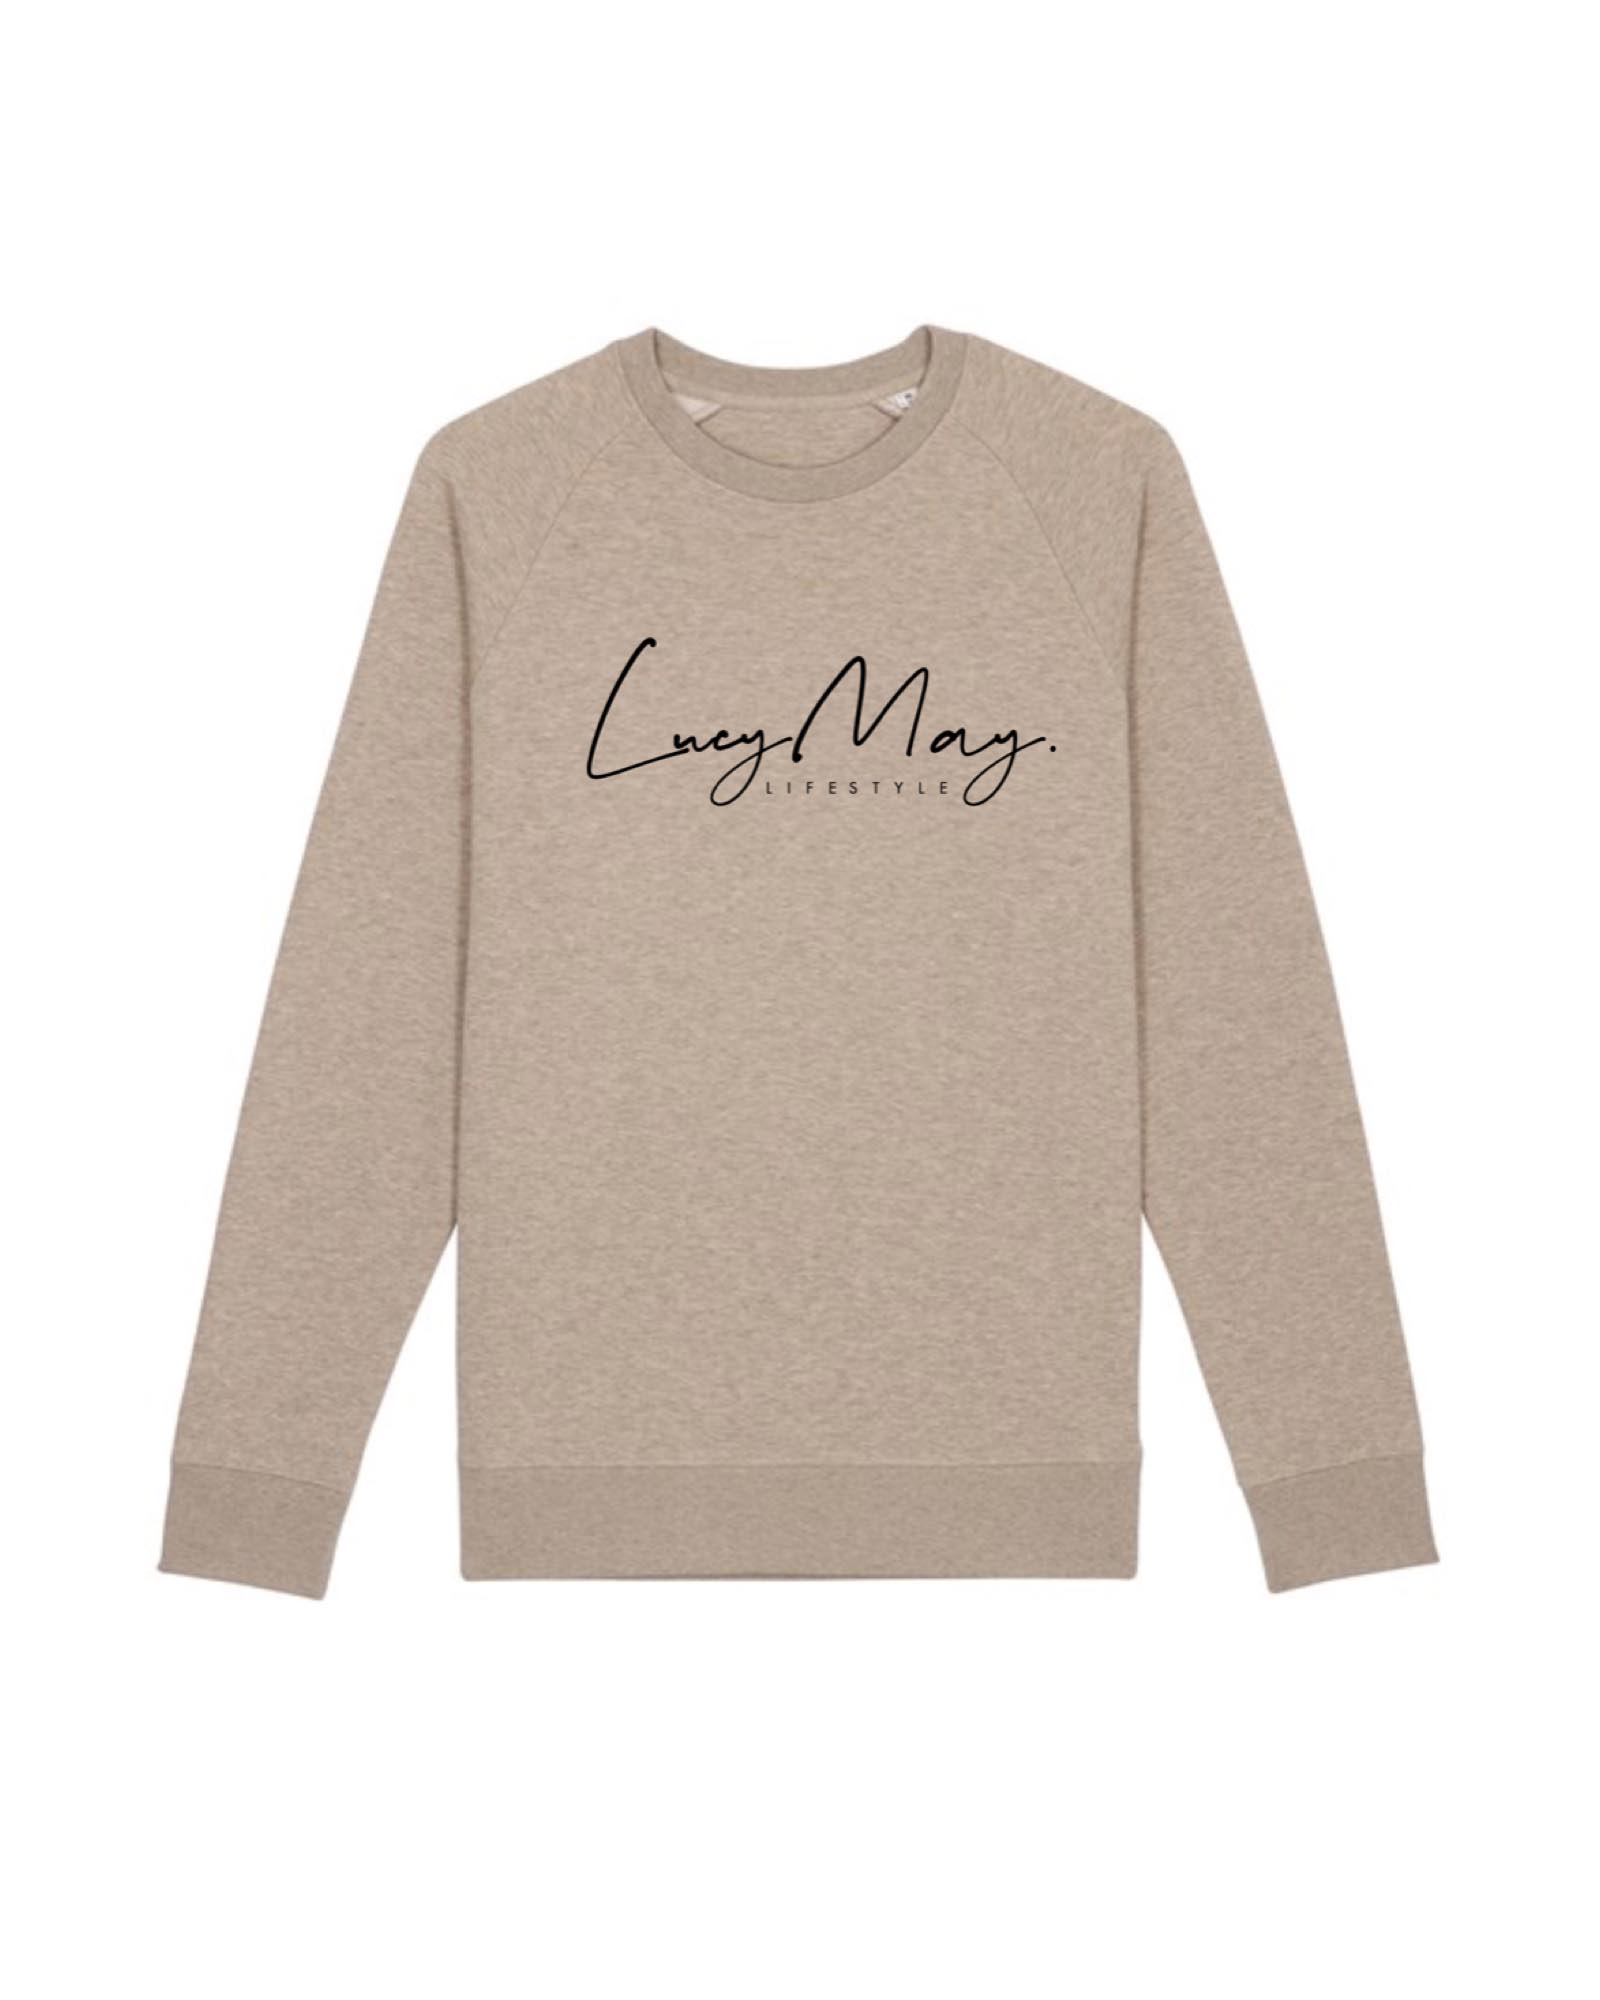 Lucy May Lifestyle Oversized Sweatshirt Heather Sand - Lucy May